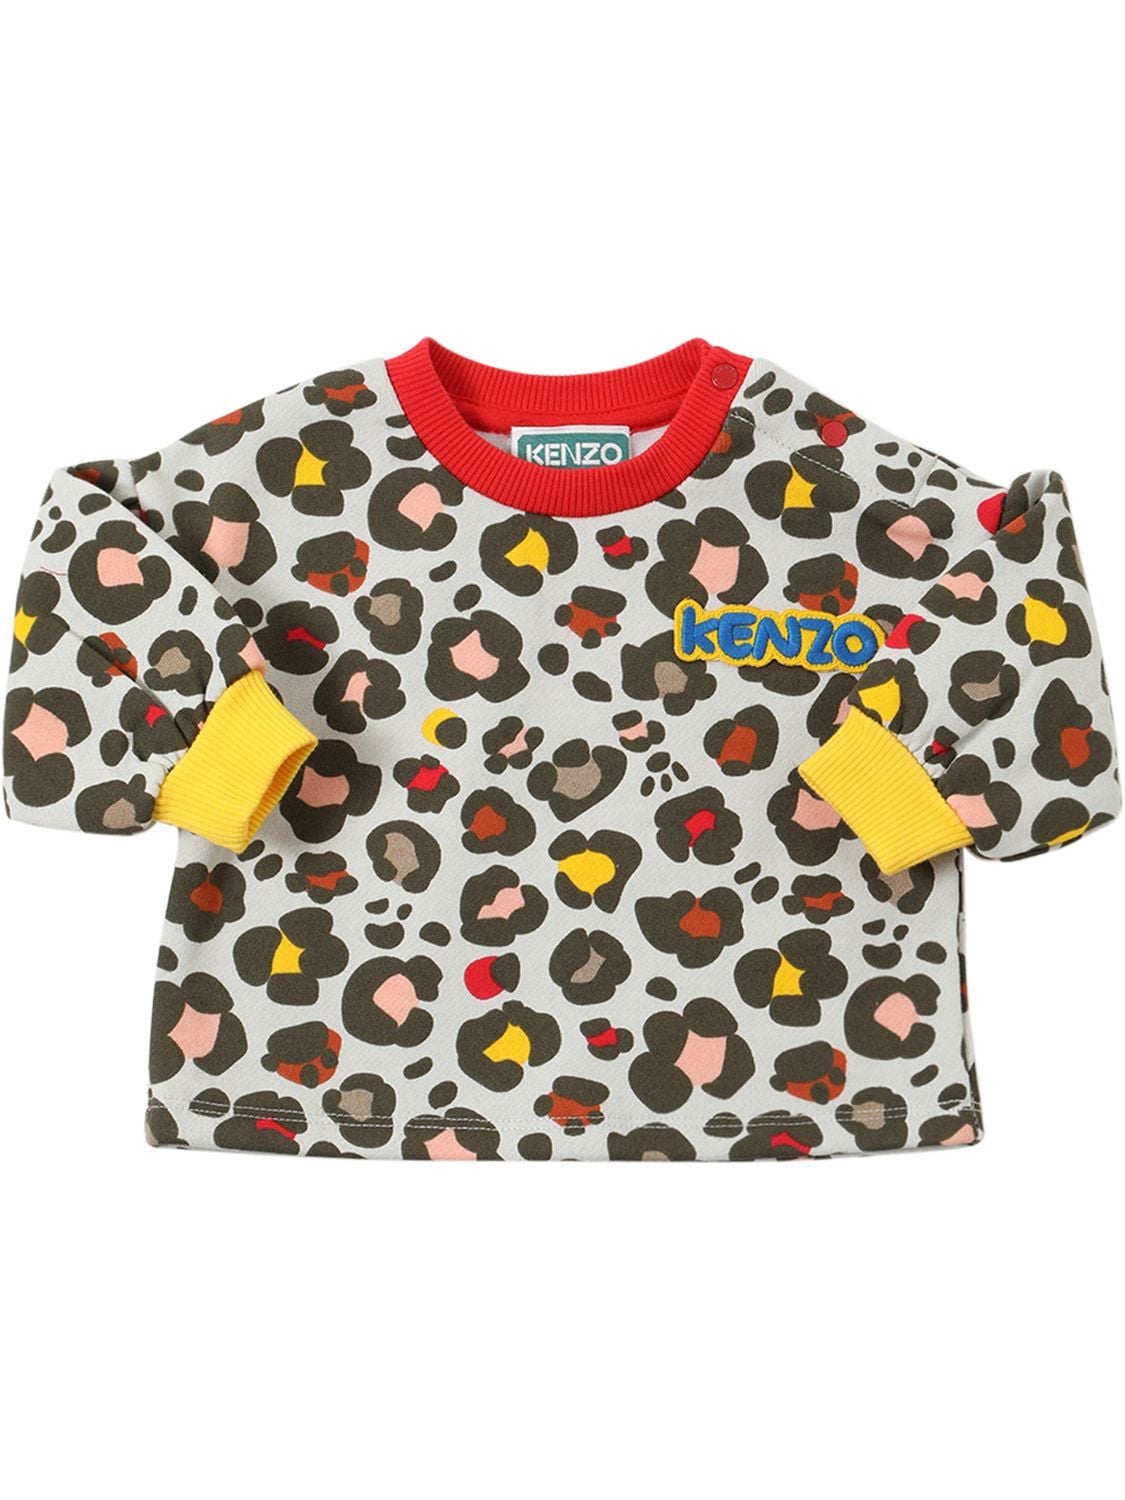 Kenzo Kids' Printed Cotton Jersey Sweatshirt In Multicolor